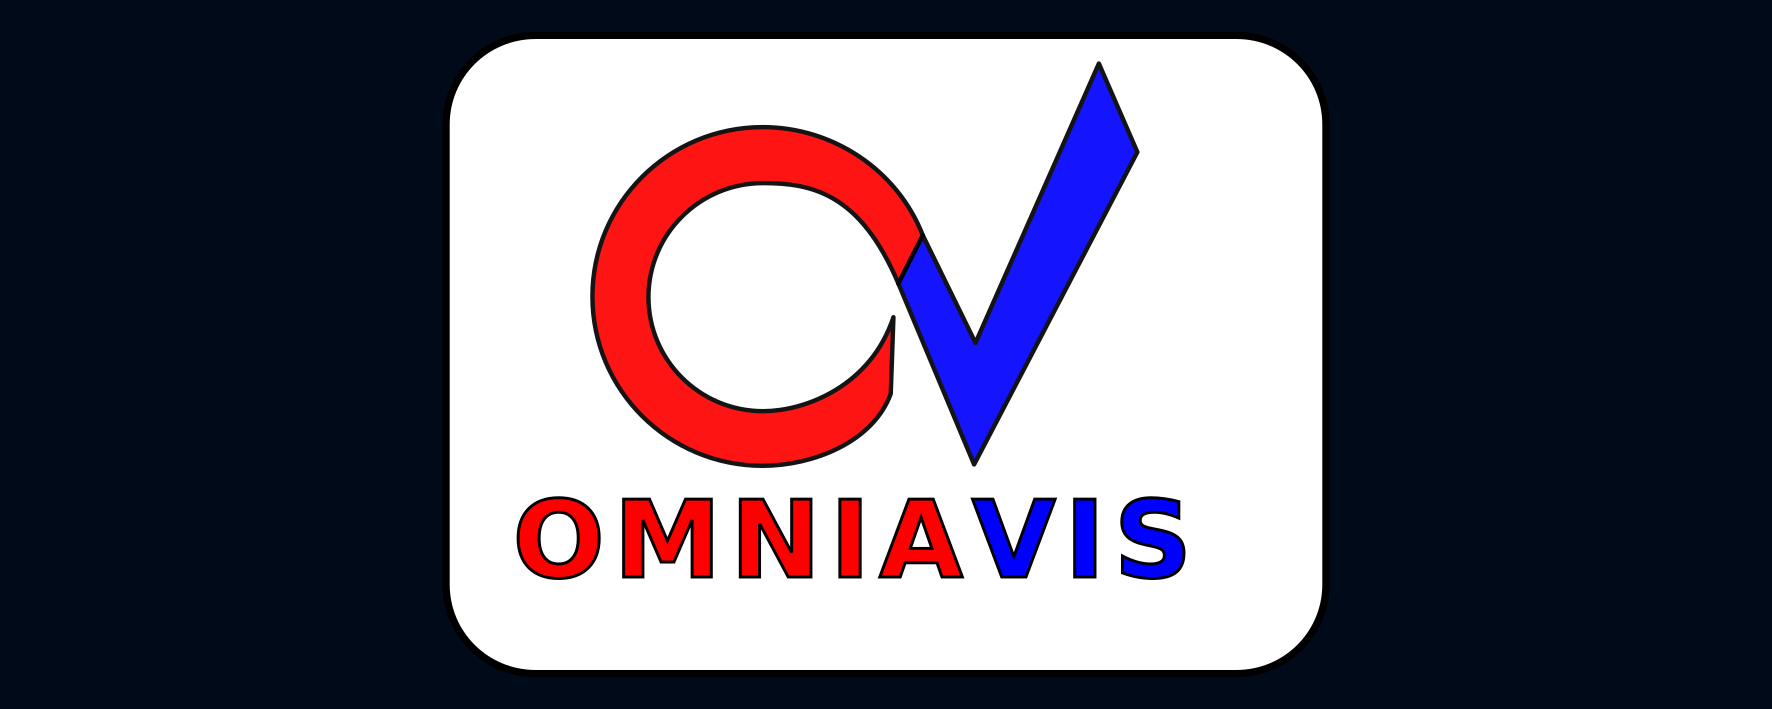 Community Omniavis